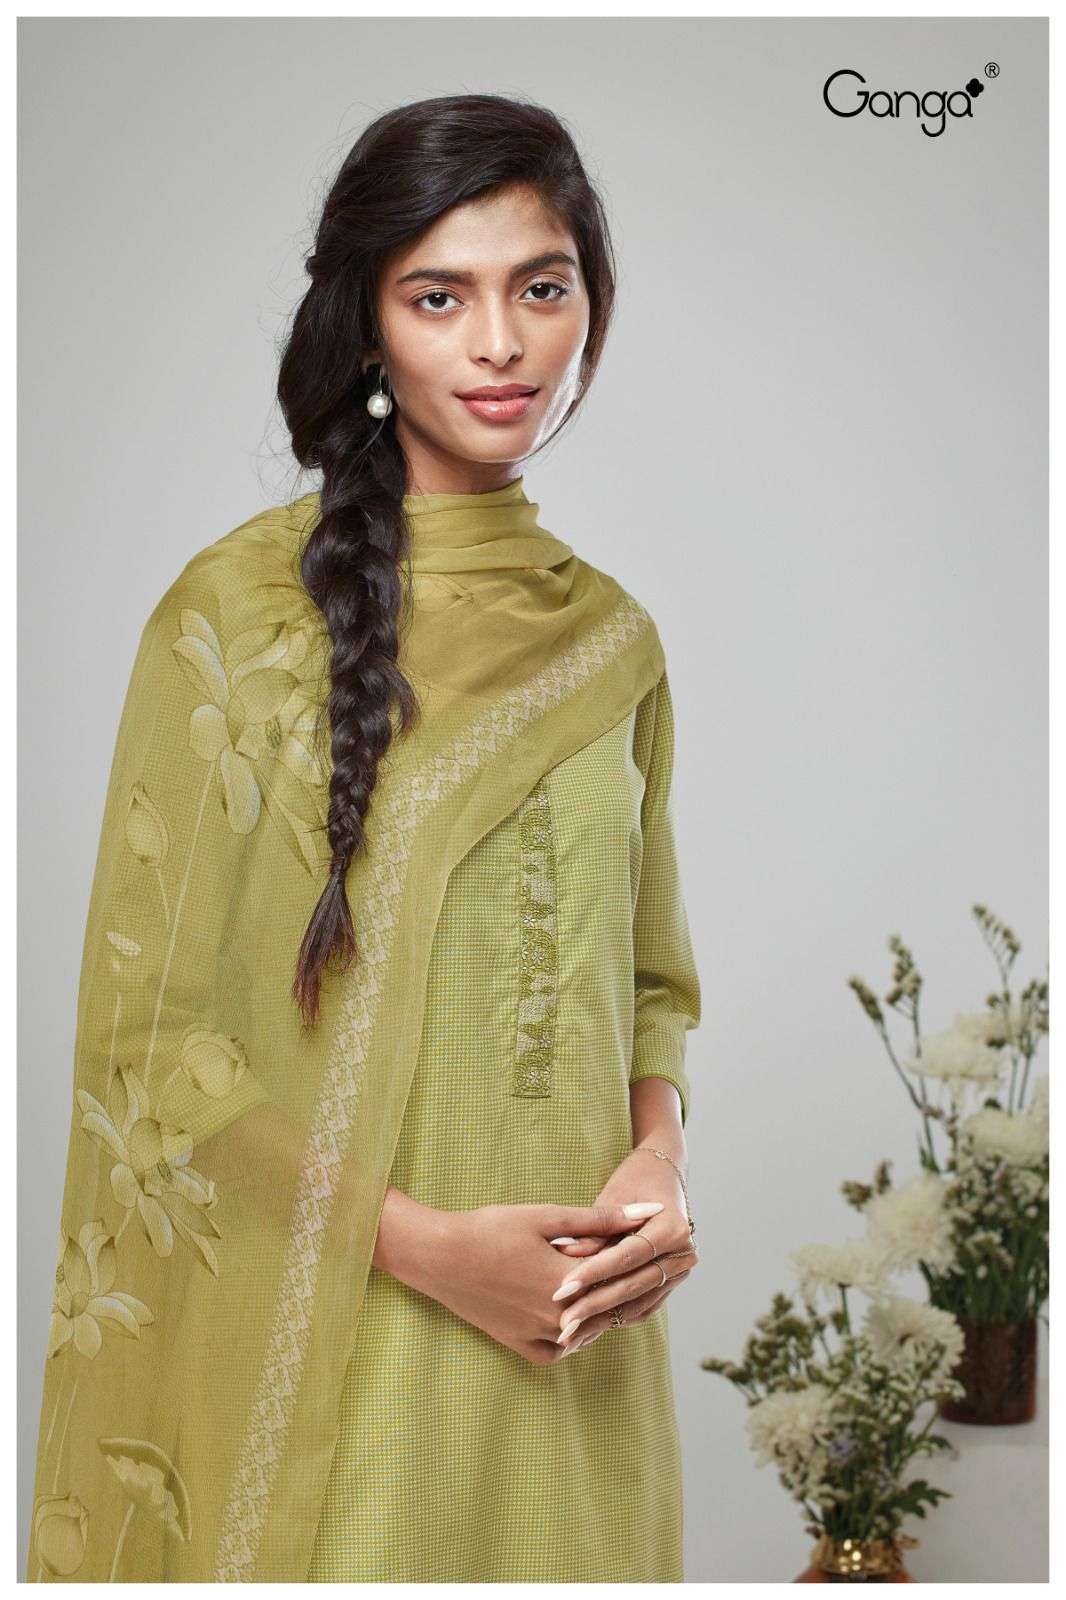 ganga nirupa 1678 series premium cotton designer salwar kameez catalogue wholesale price surat 